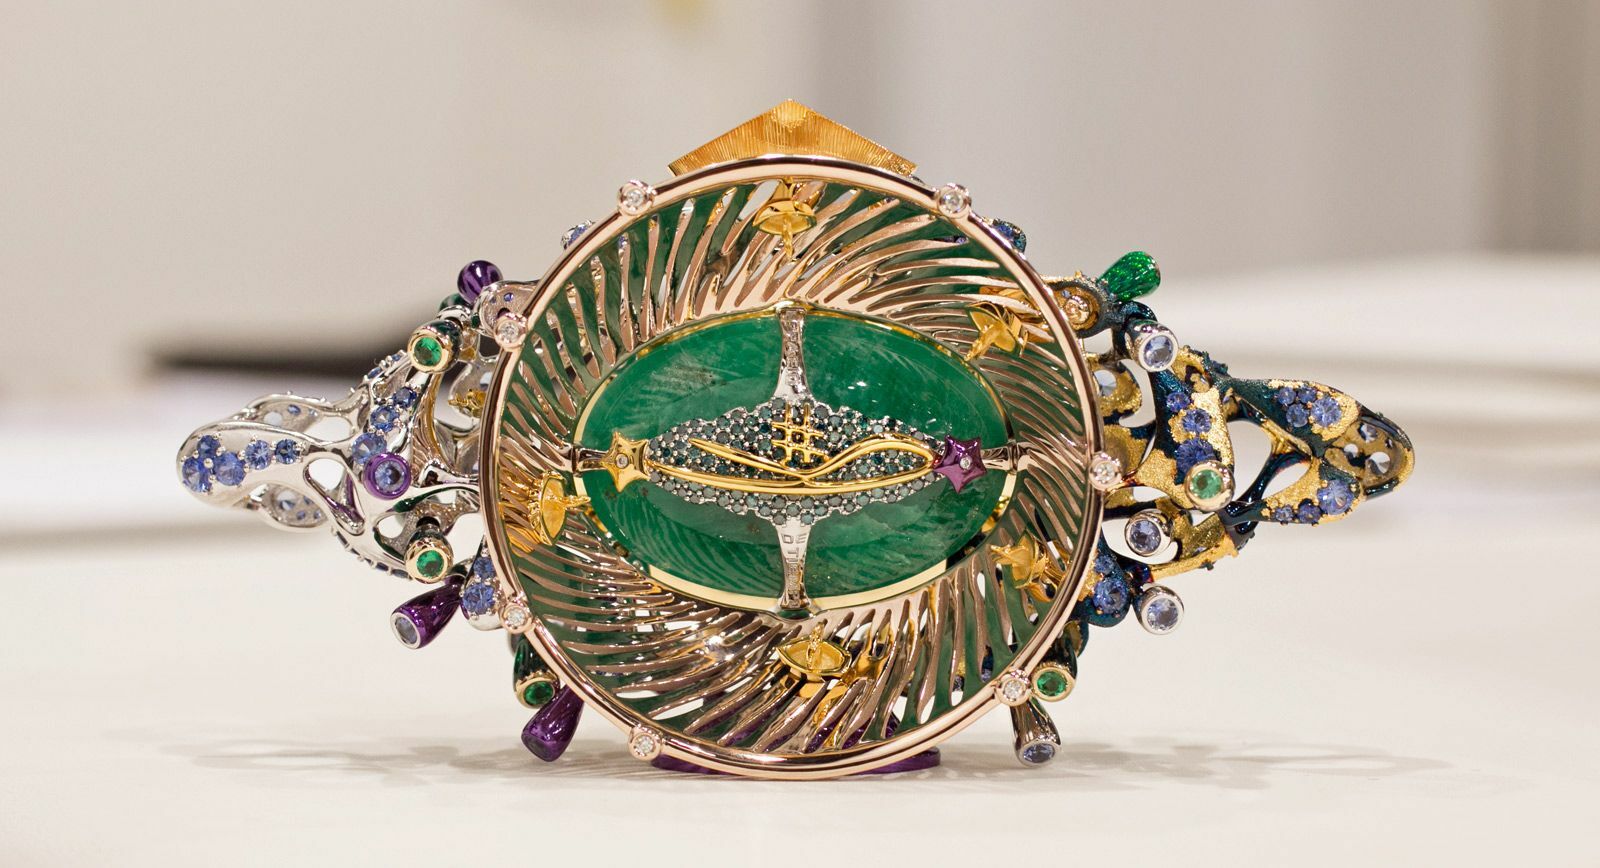 RINGO: the embodiment of jewelled time in Espacio de tiempo jewellery